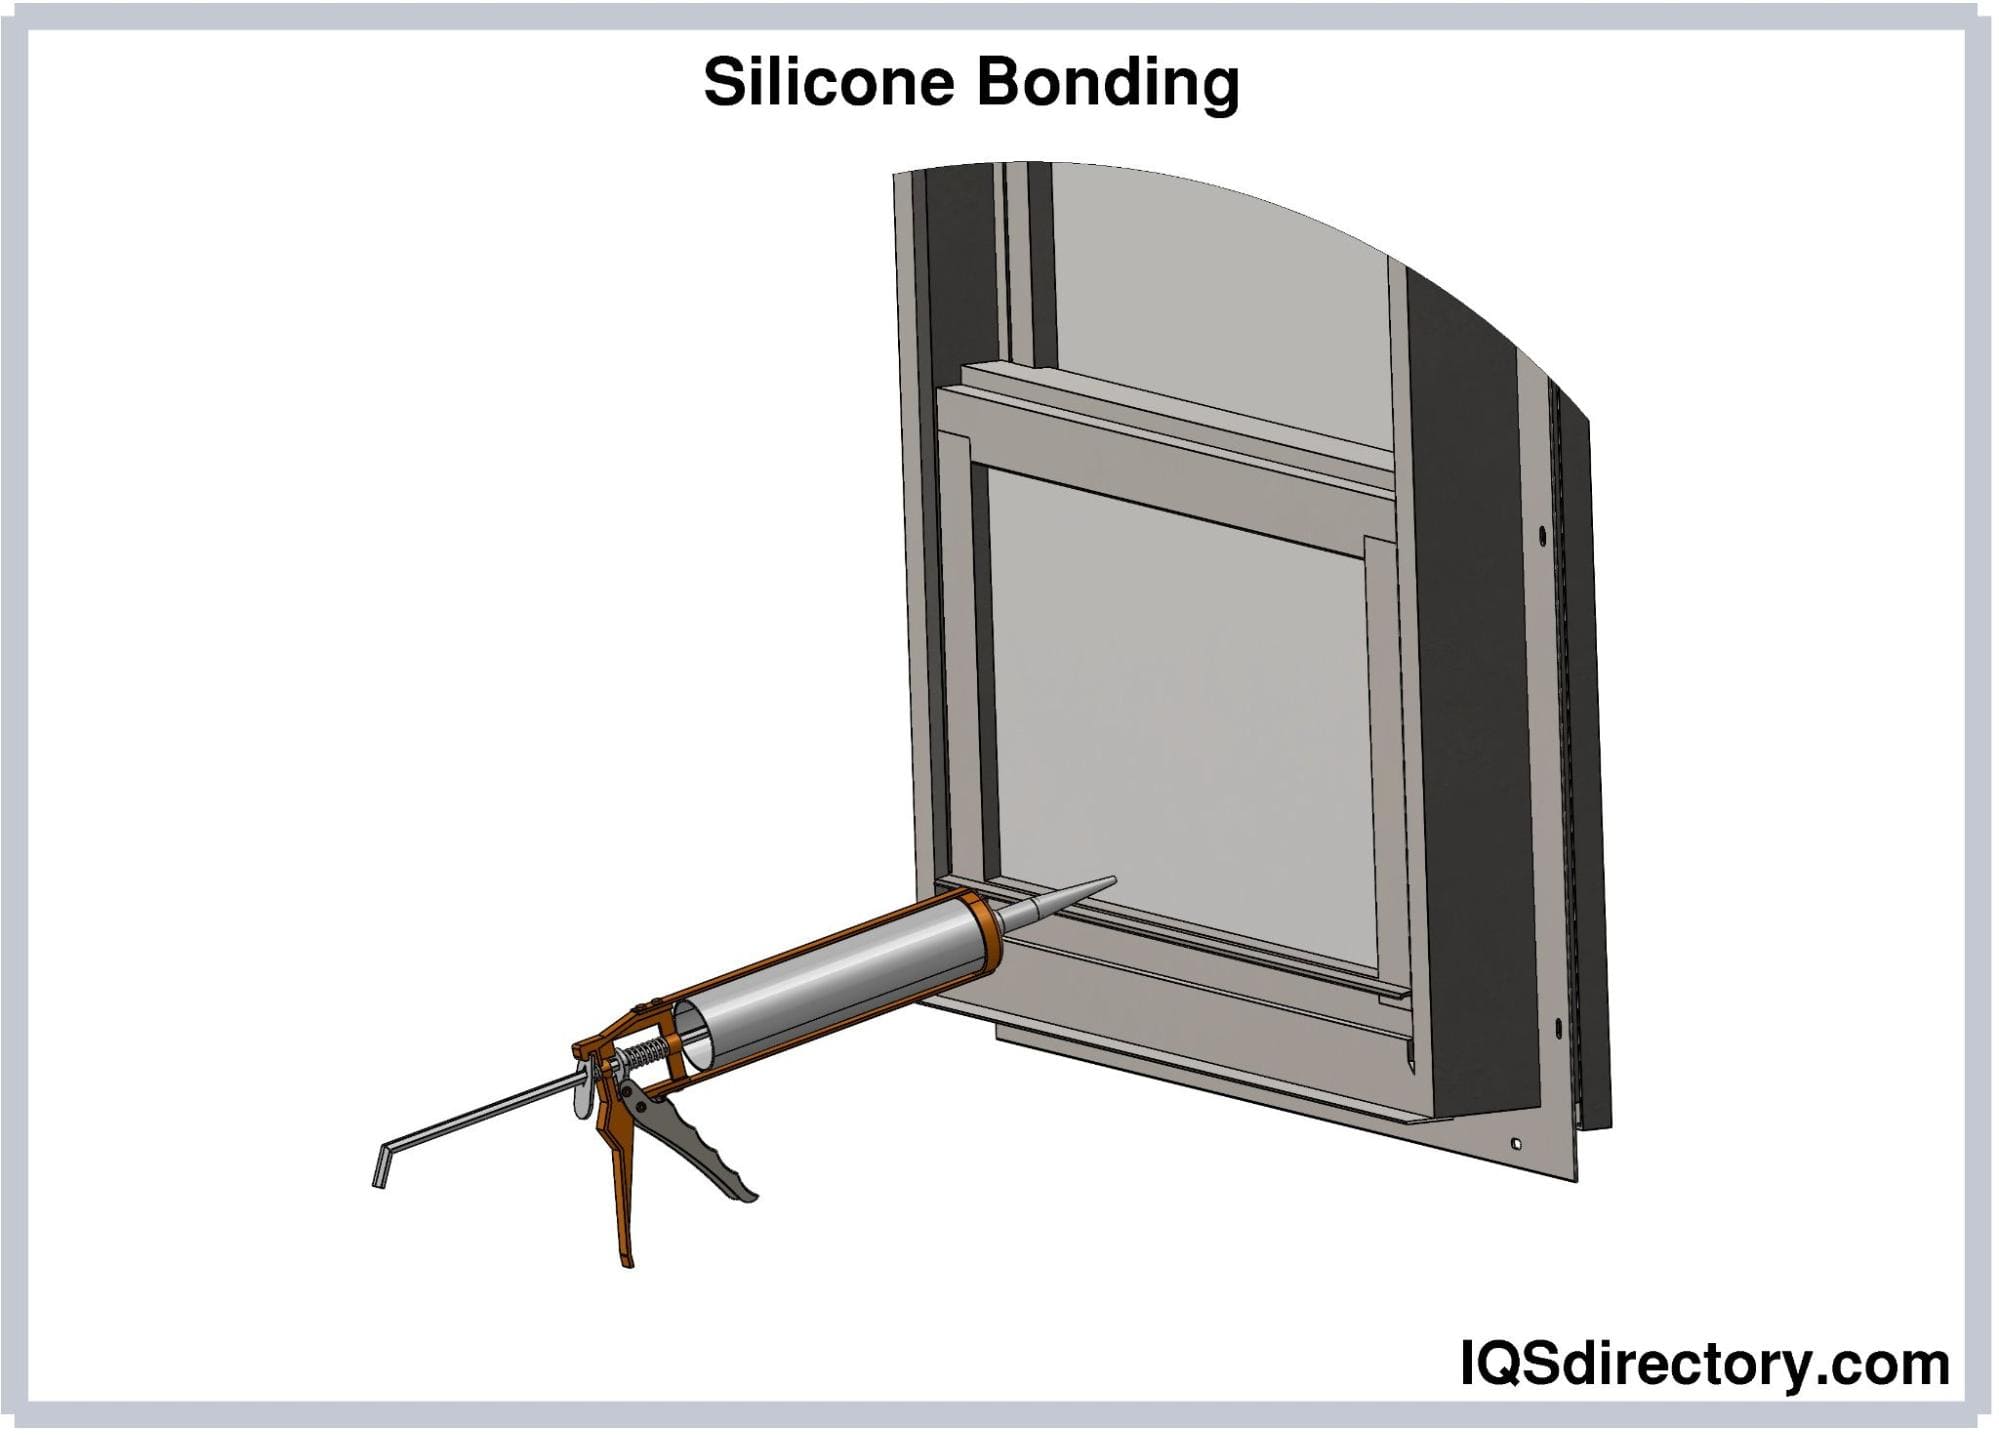 Silicone Bonding